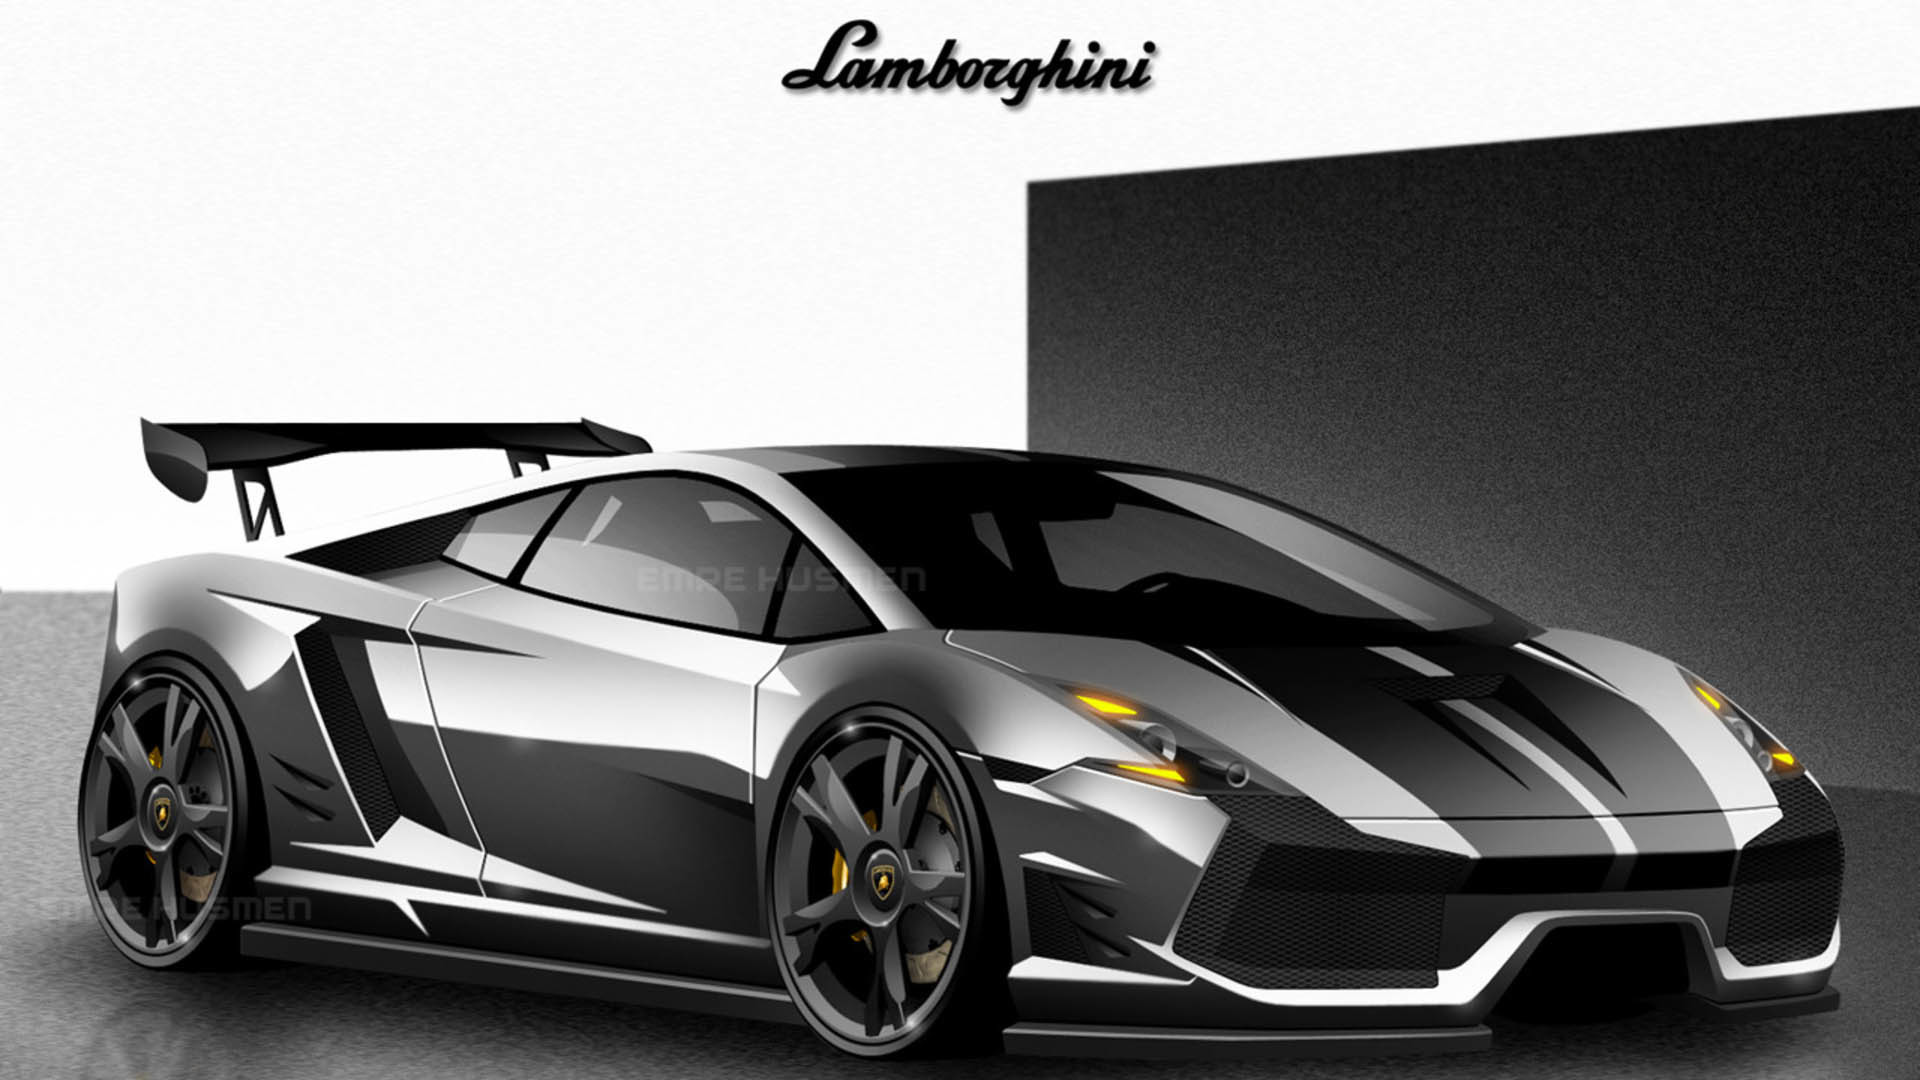 Black And White Lamborghini Wallpapers